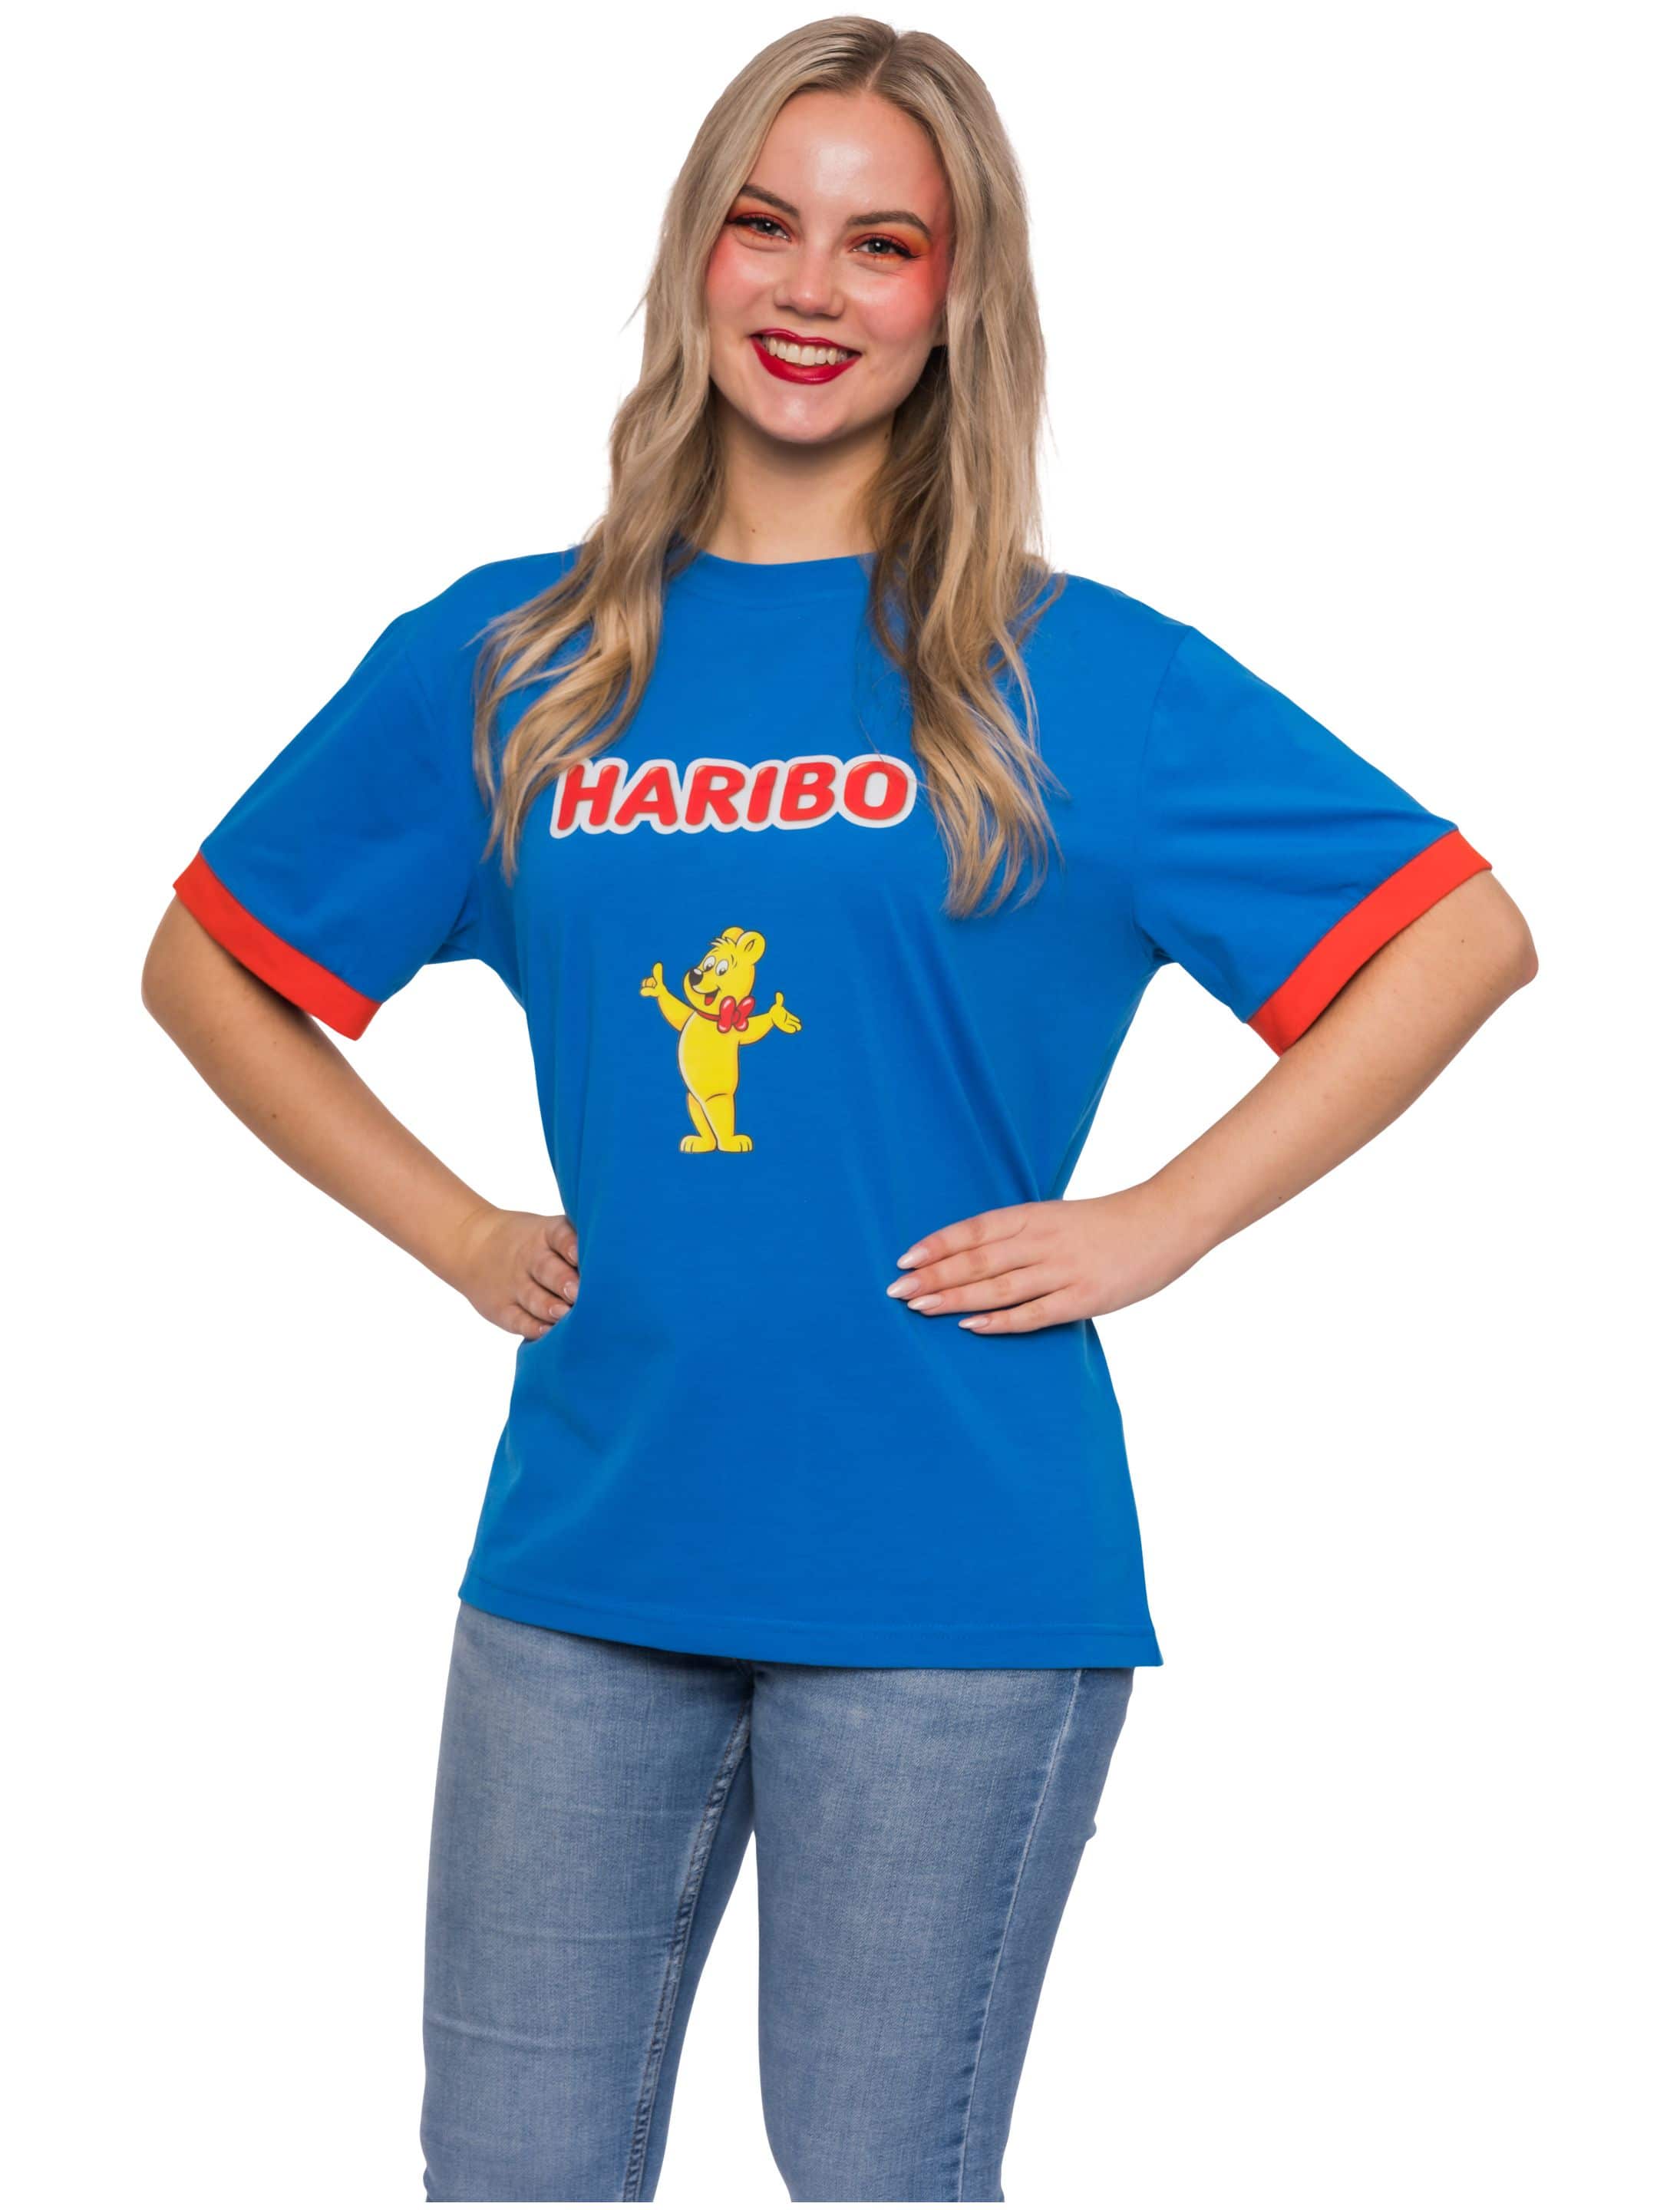 T-Shirt HARIBO Goldbären blau L